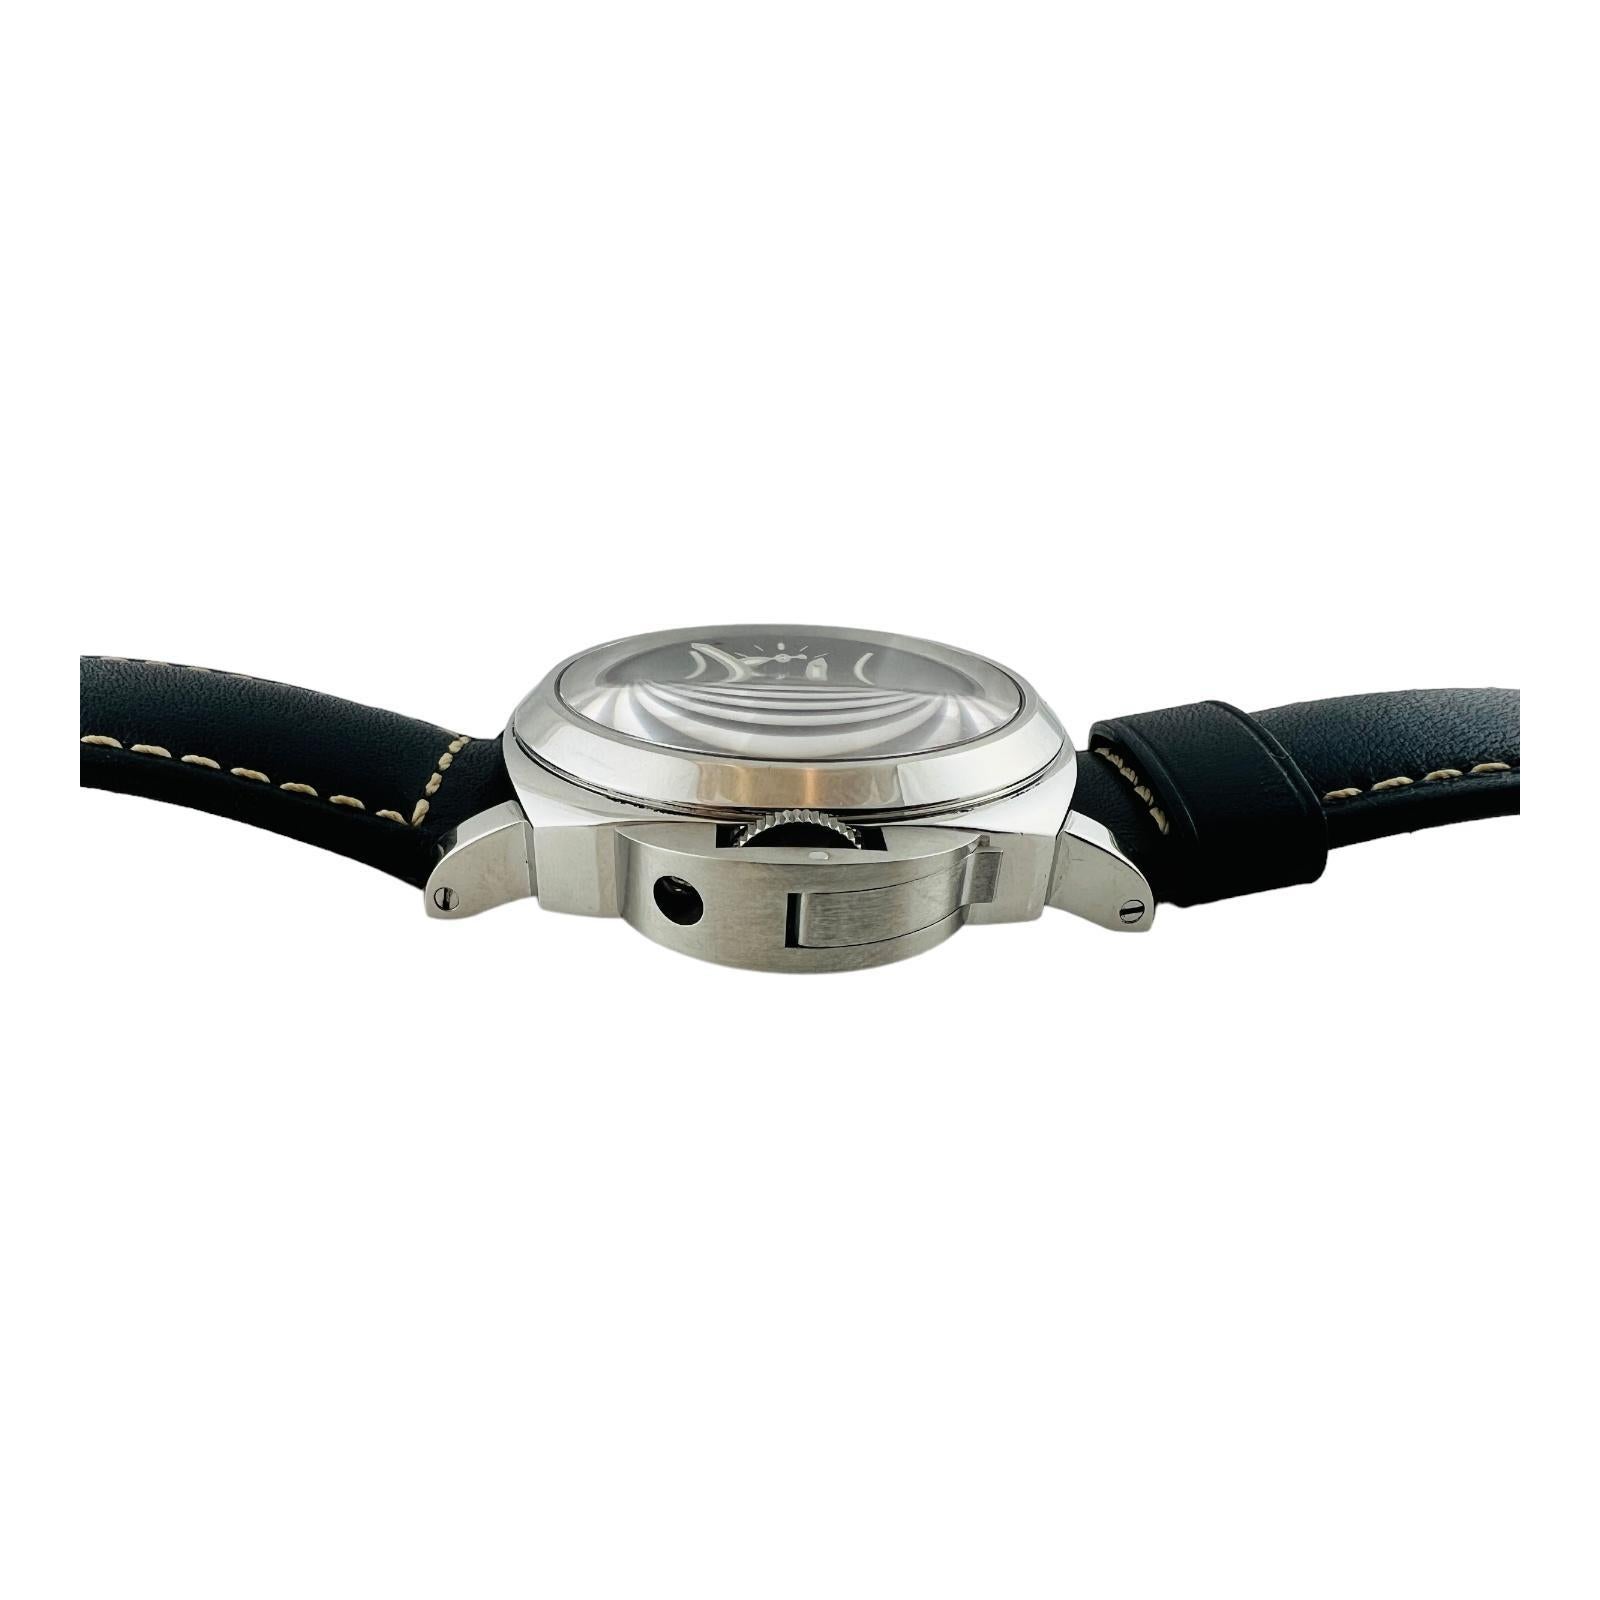 Panerai Luminor Men's Watch PAM 1085 Full Set Blue Dial #15776 For Sale 1